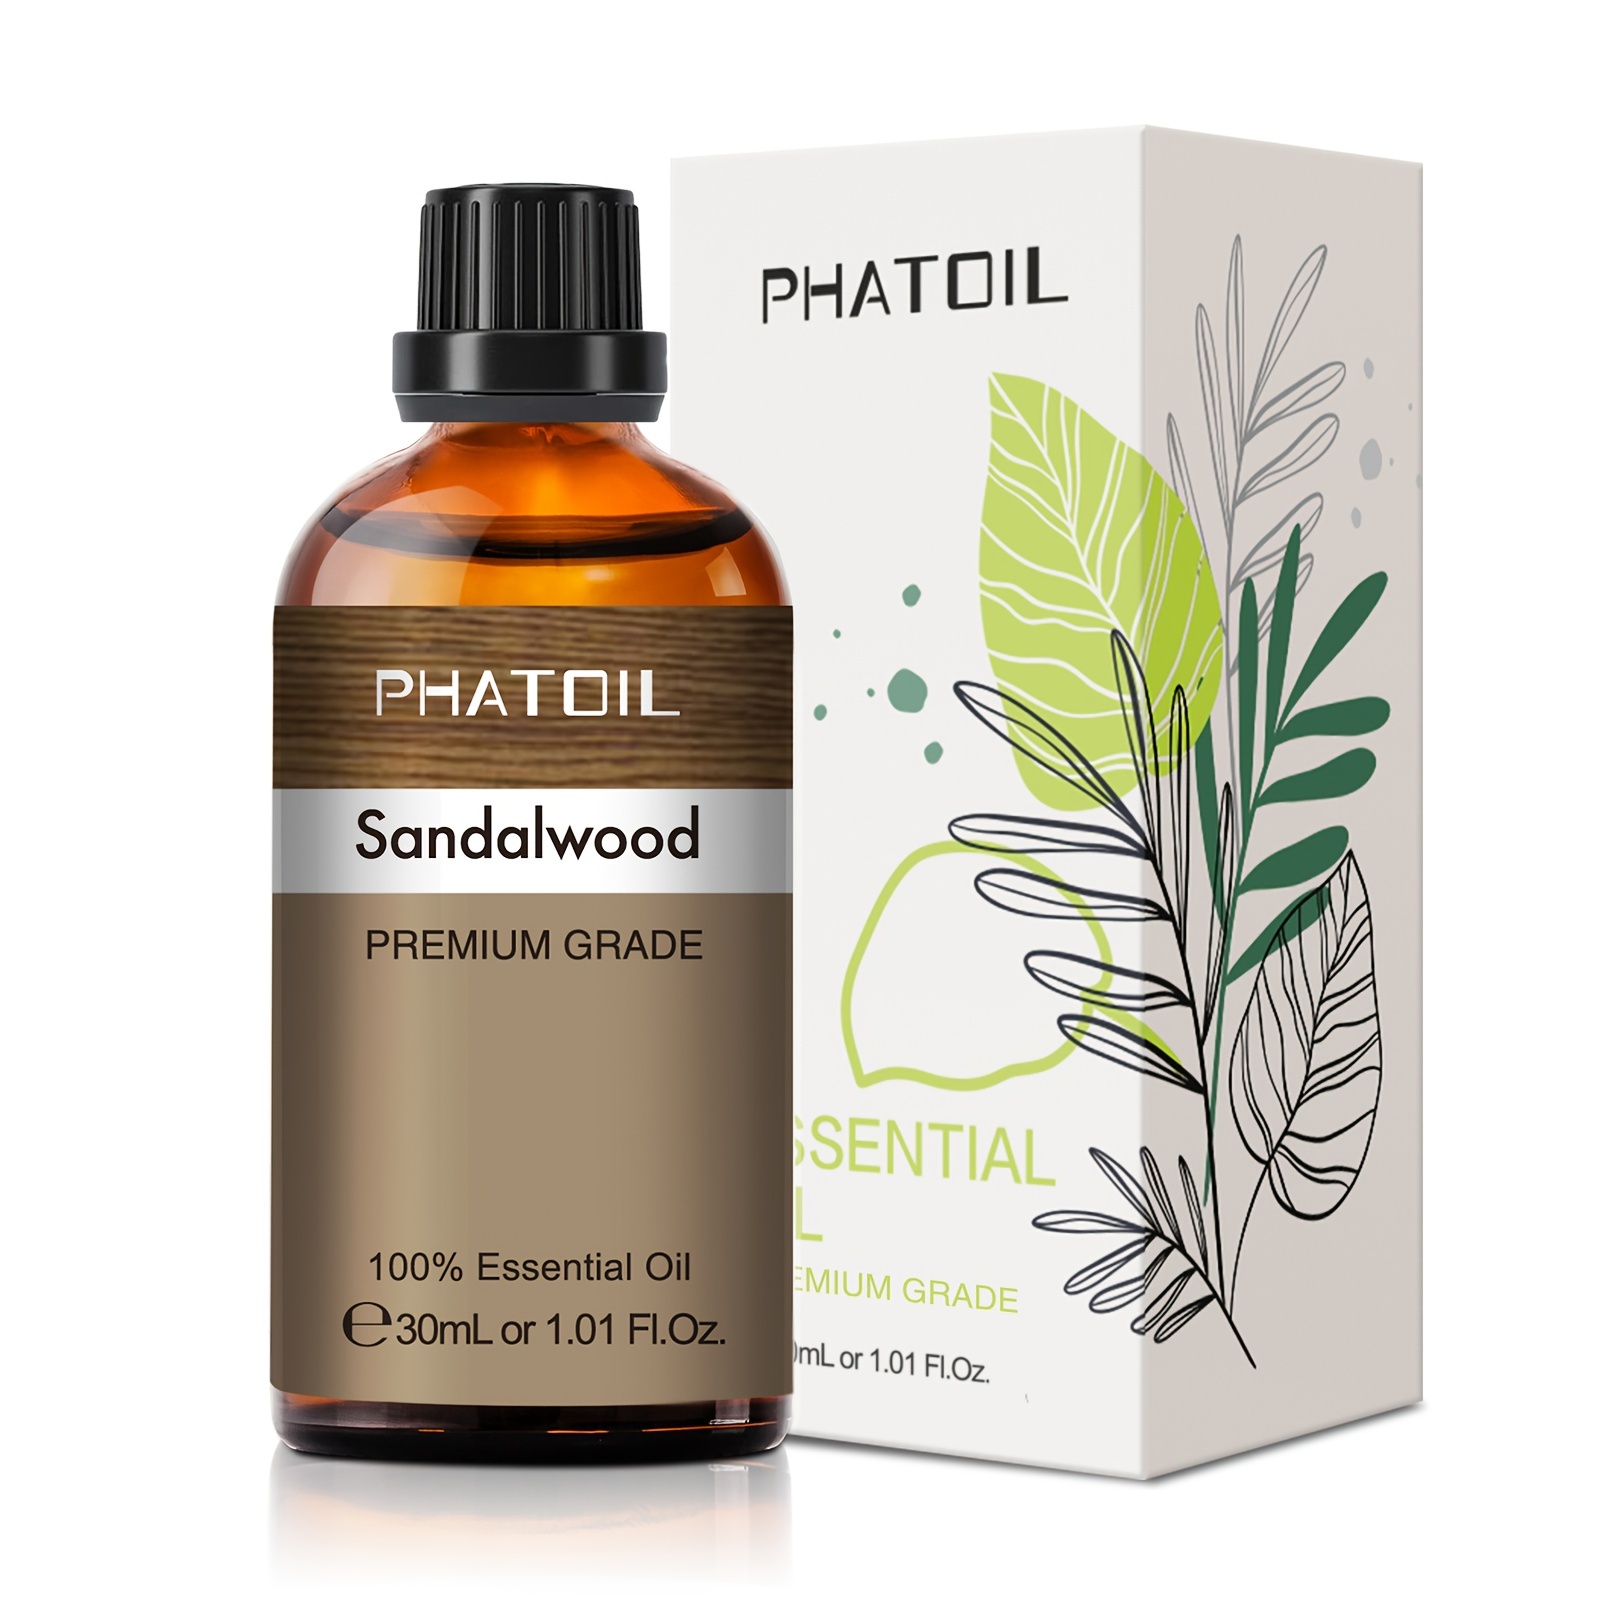 Plant Therapy Sandalwood Australian Organic Essential Oil 5 ml (1/6 oz)100% Pure